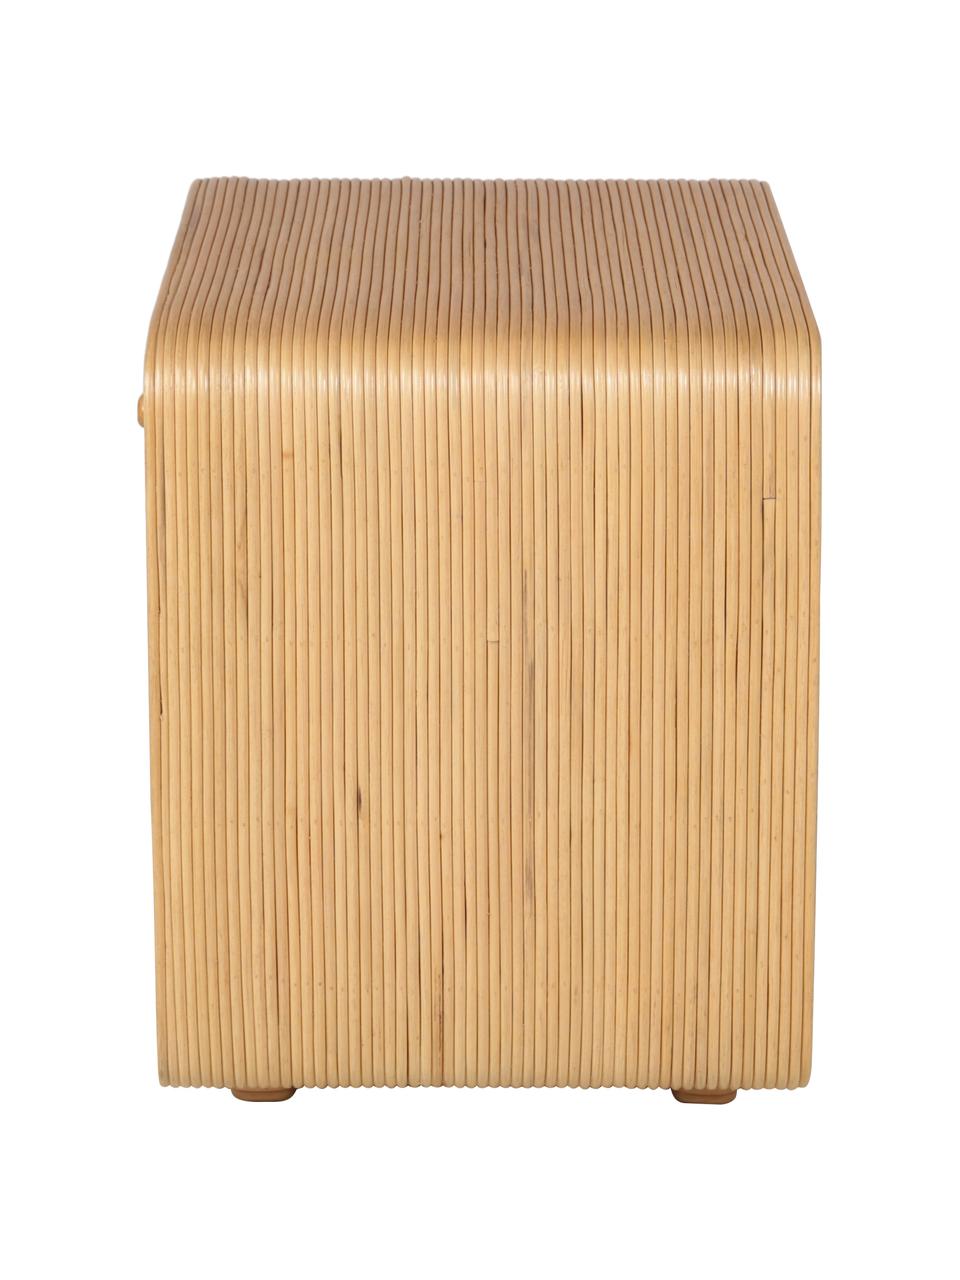 Table de chevet en rotin Wapa, Rotin, Brun clair, larg. 57 x haut. 52 cm